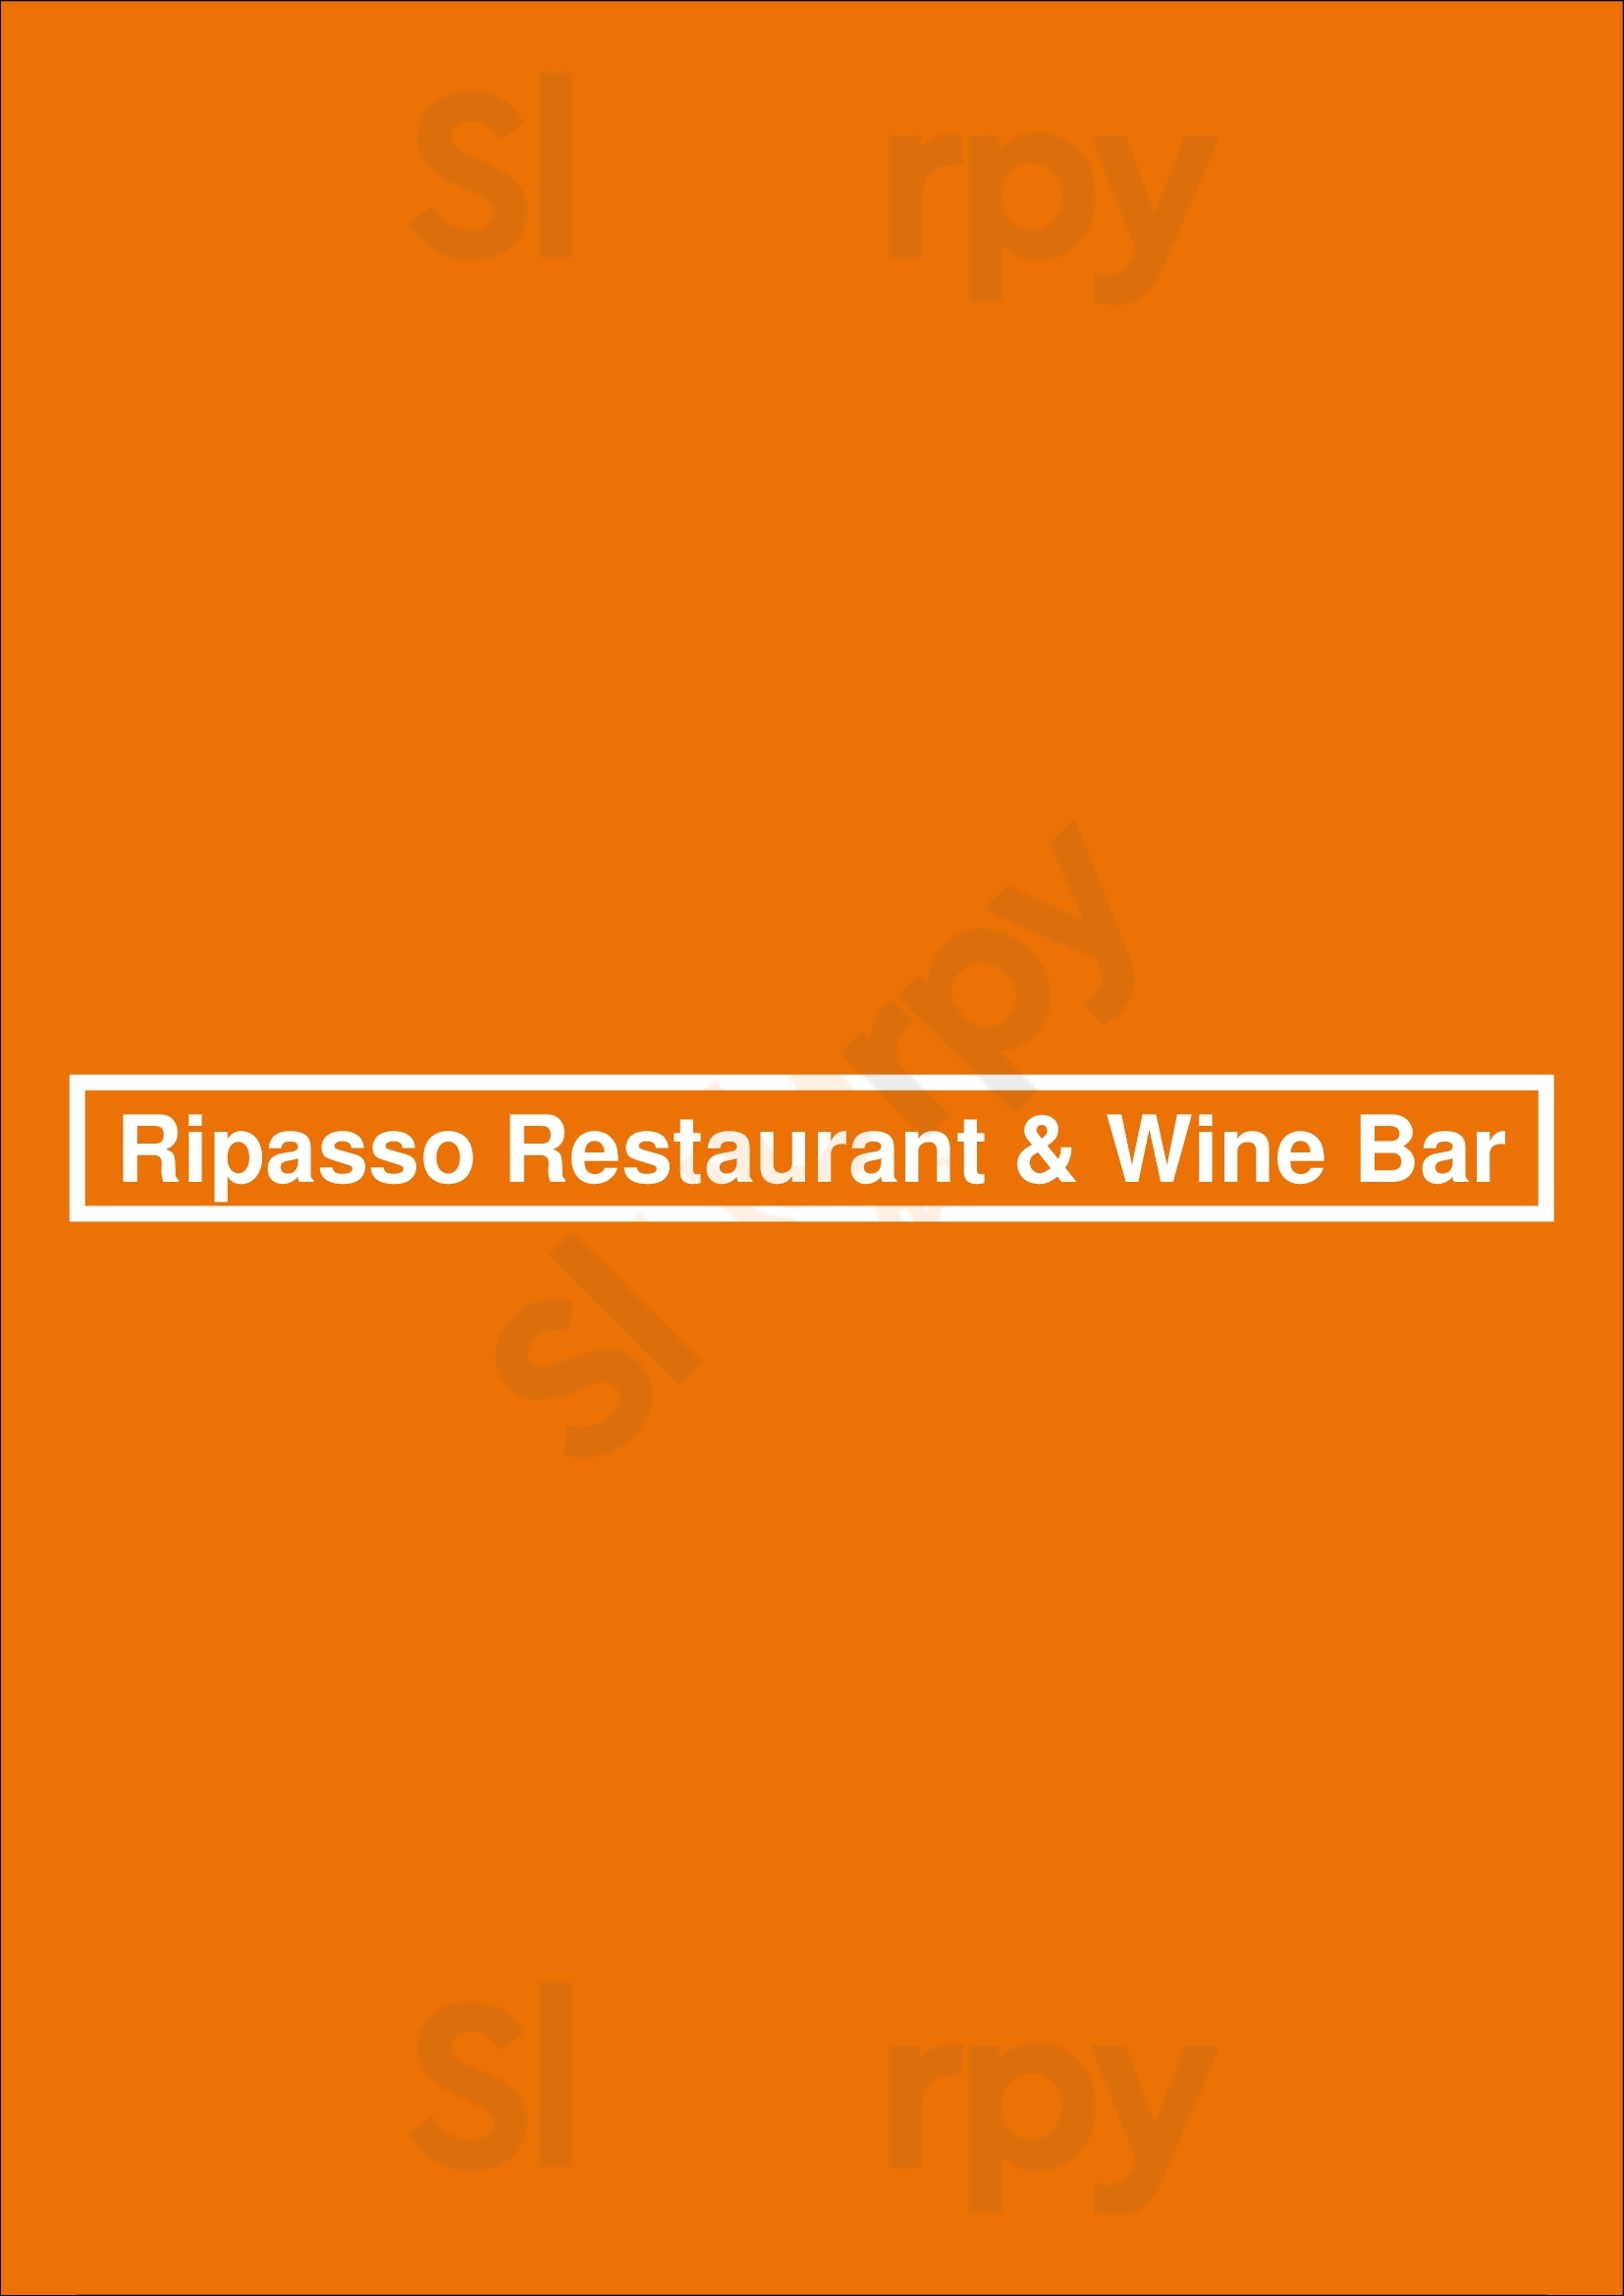 Ripasso Restaurant & Wine Bar Bray Menu - 1